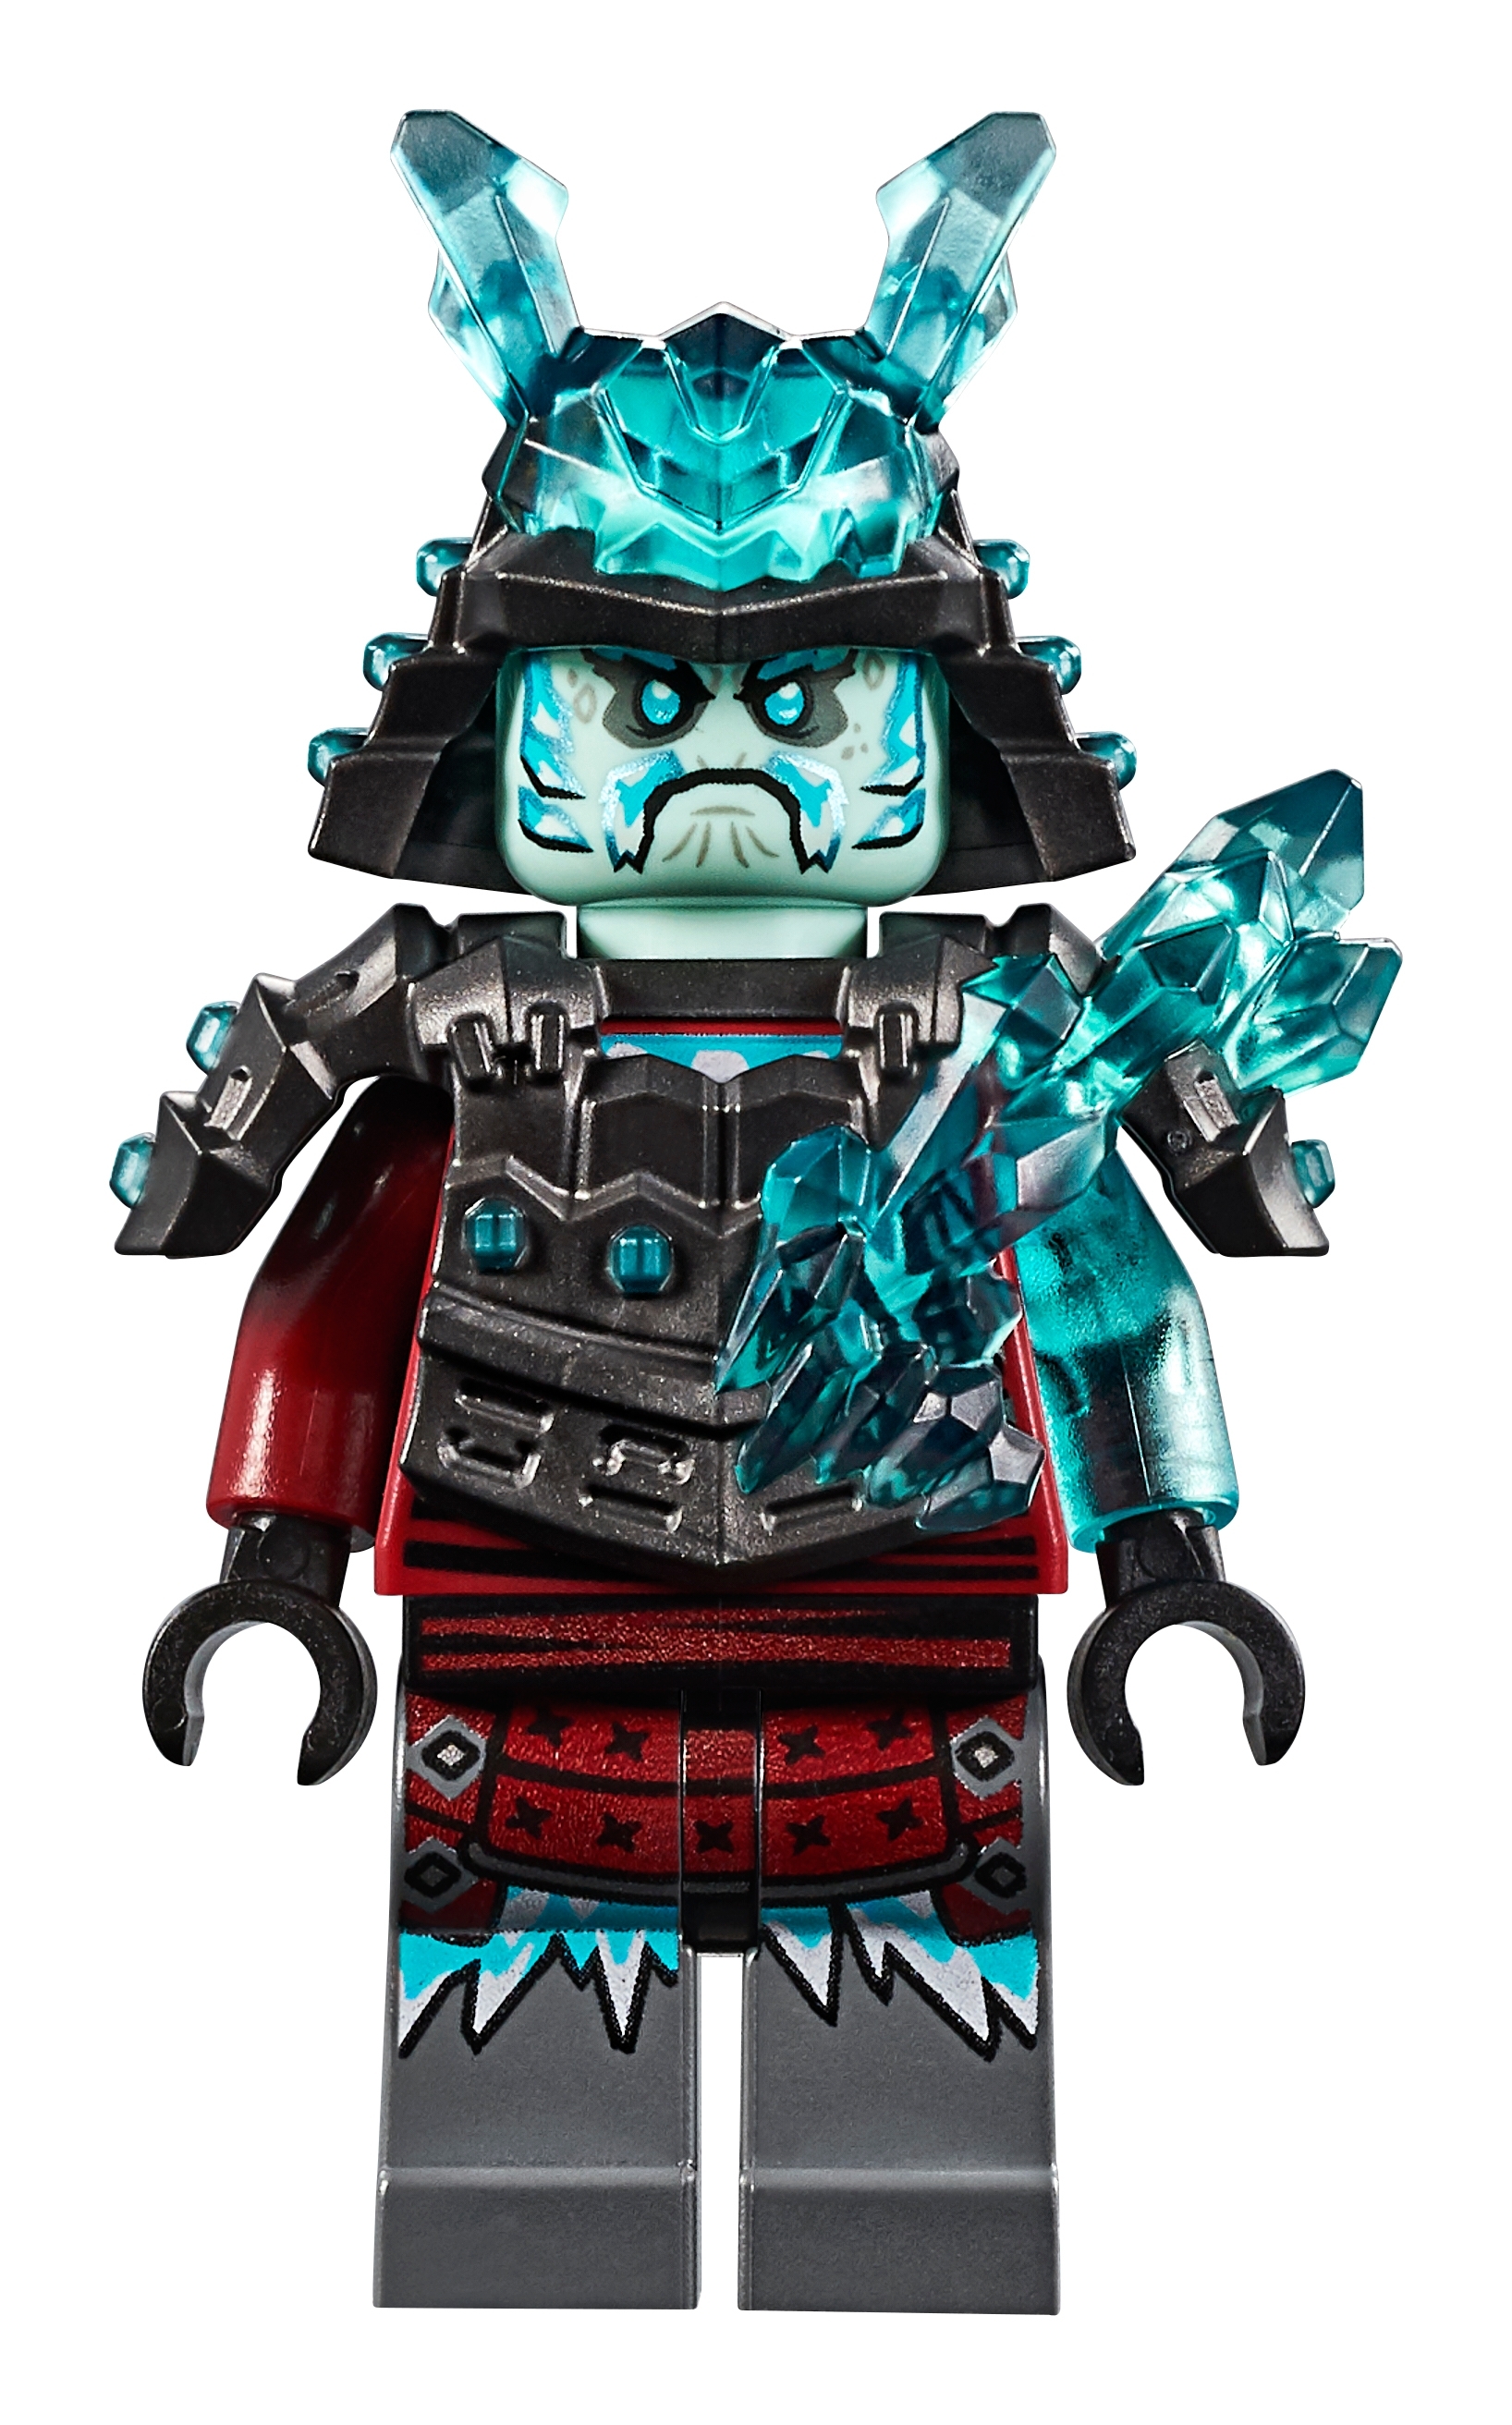 njo525 NEW LEGO Blizzard Sword Master FROM SET 70678 NINJAGO 